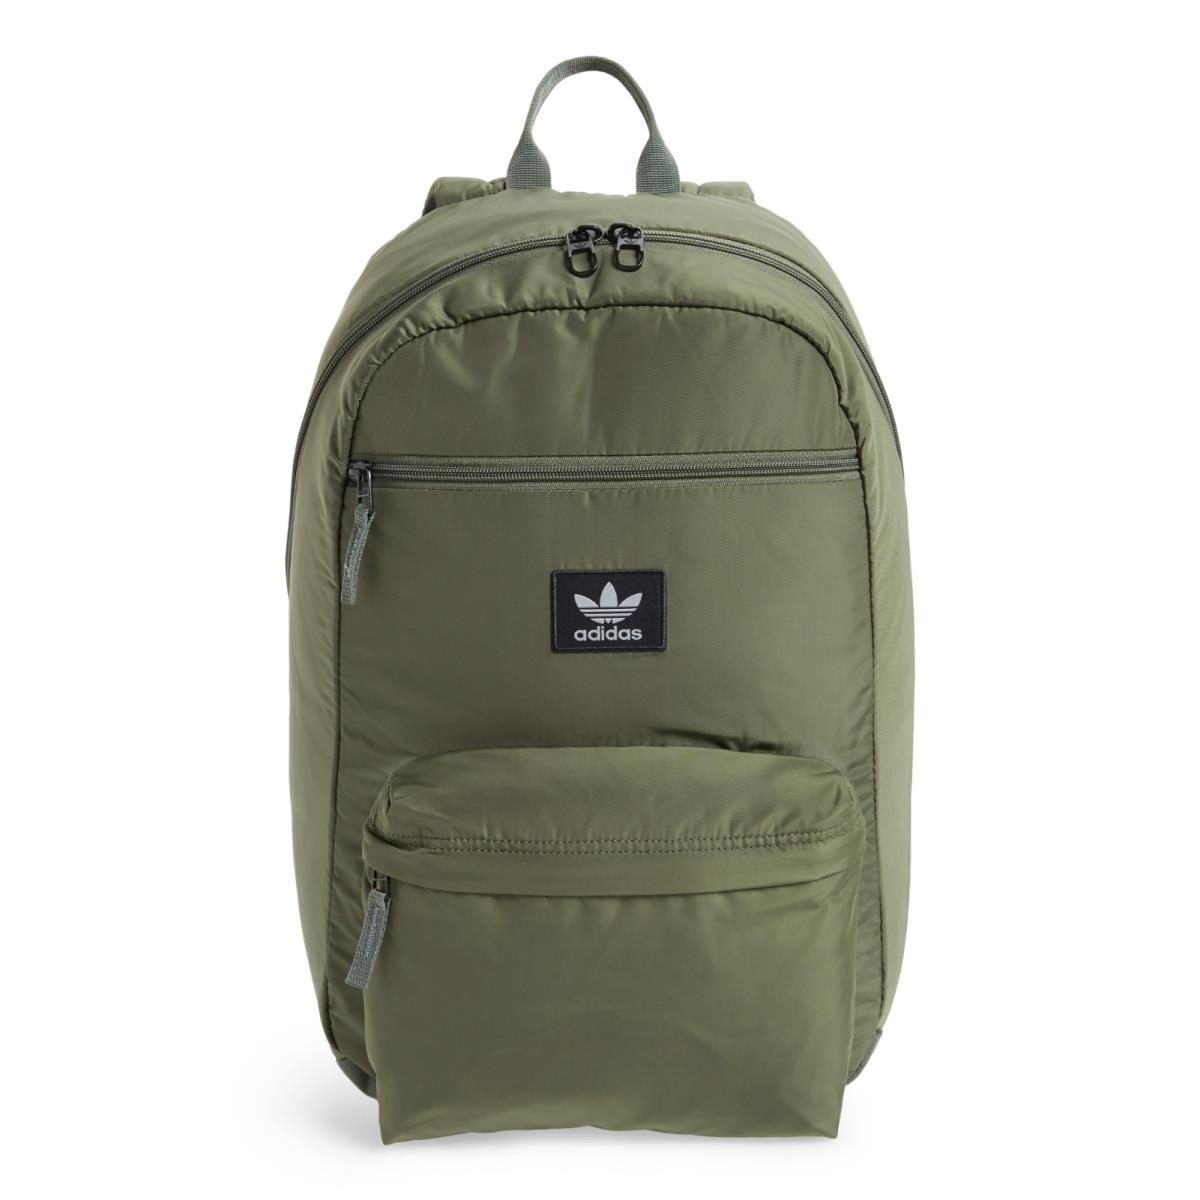 Adidas Originals National Backpack - Green In Med Green - Green